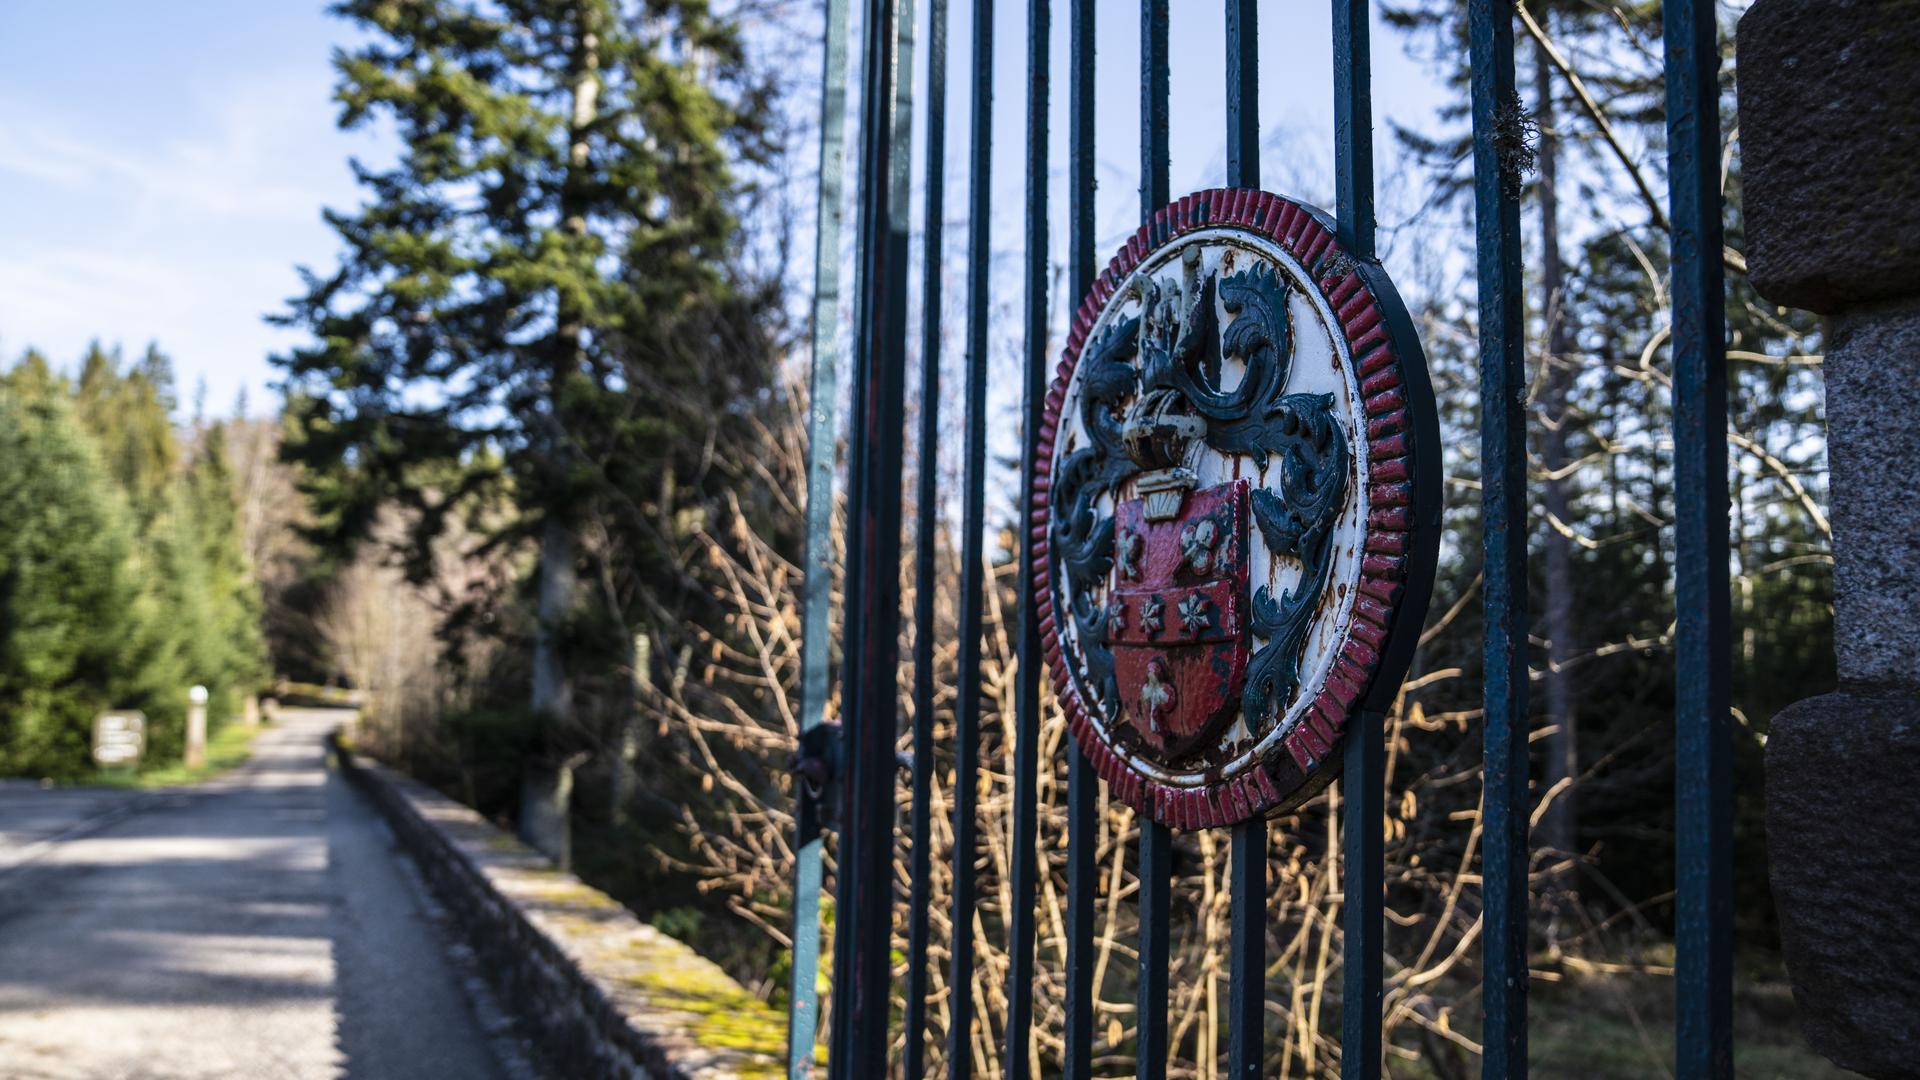 Am Eingang des Schlossparks ziert ein Wappen das Tor.